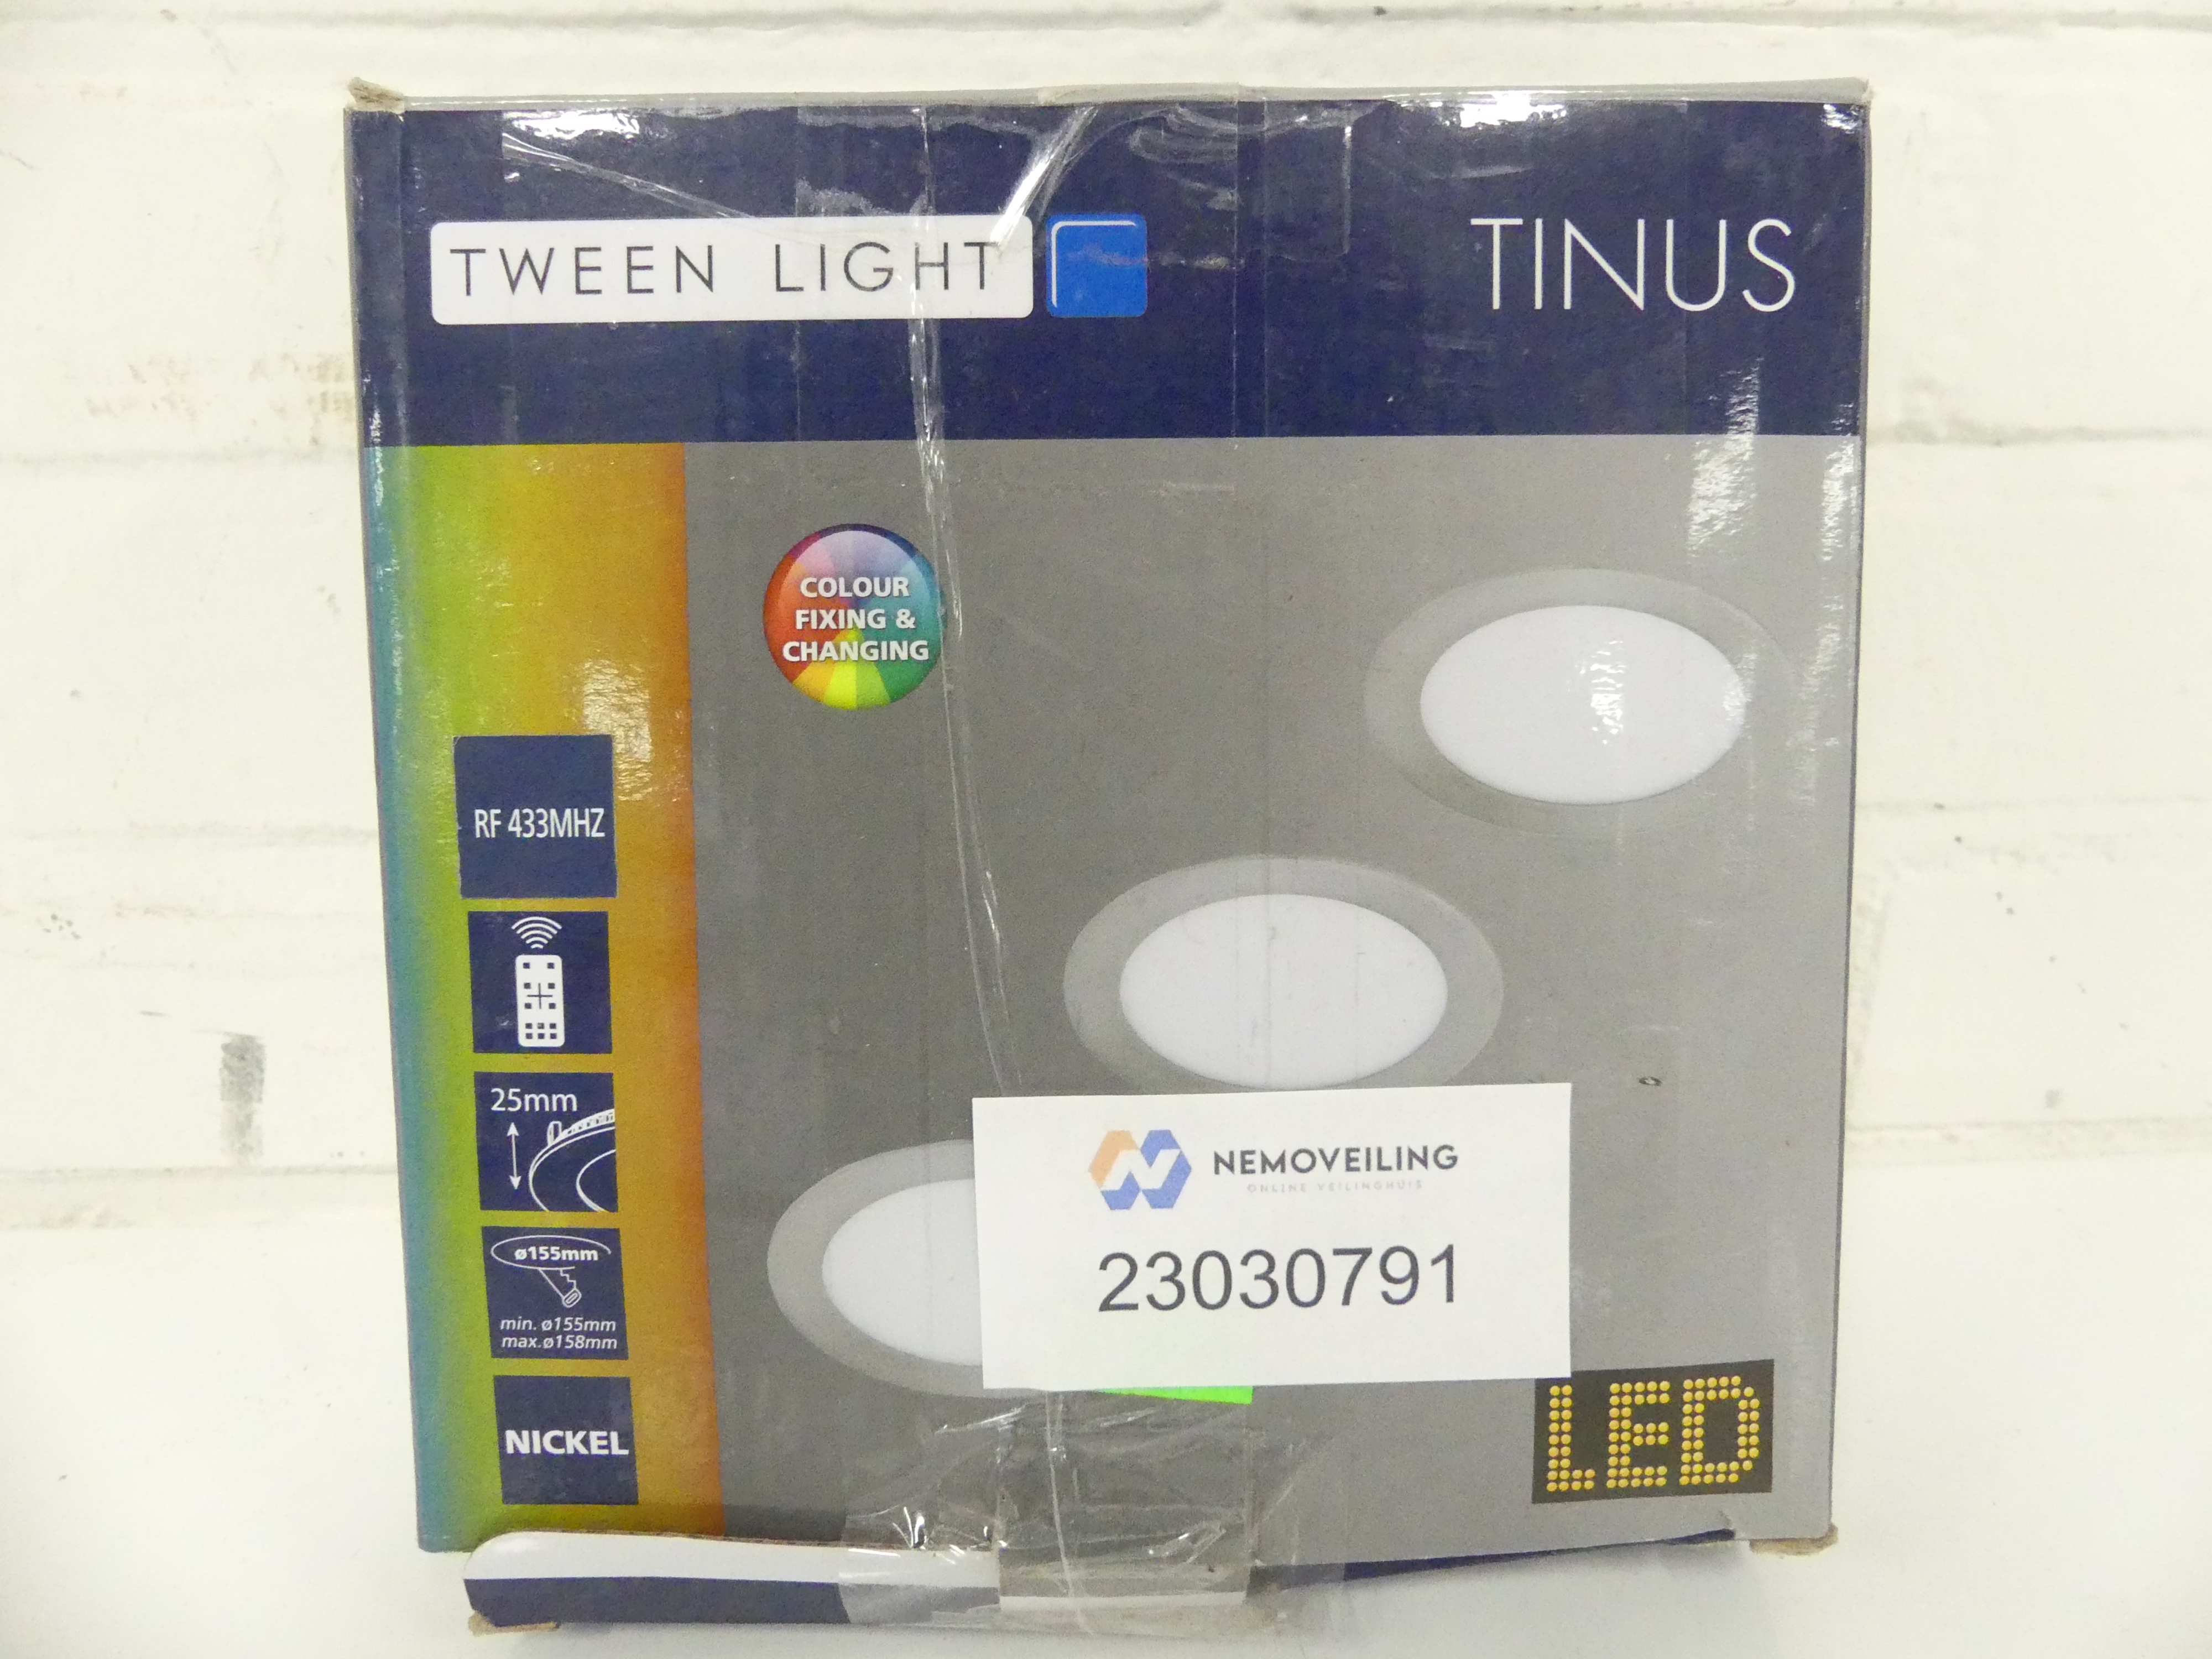 Tween lights inbouwspots Tinus 4,8W 155mm, Colour fixing & changing  